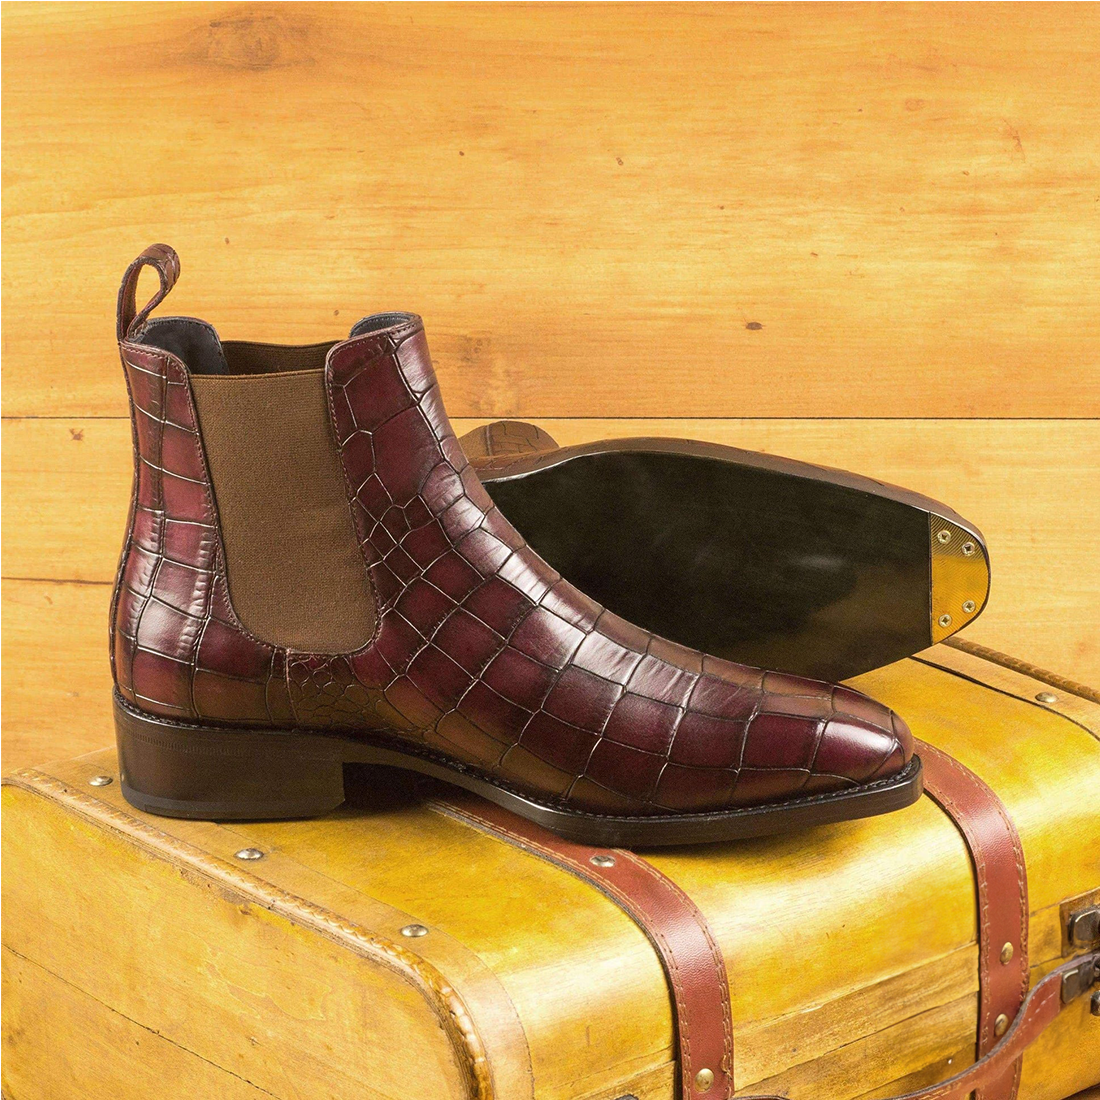 Lanfranco Chelsea Python Boots